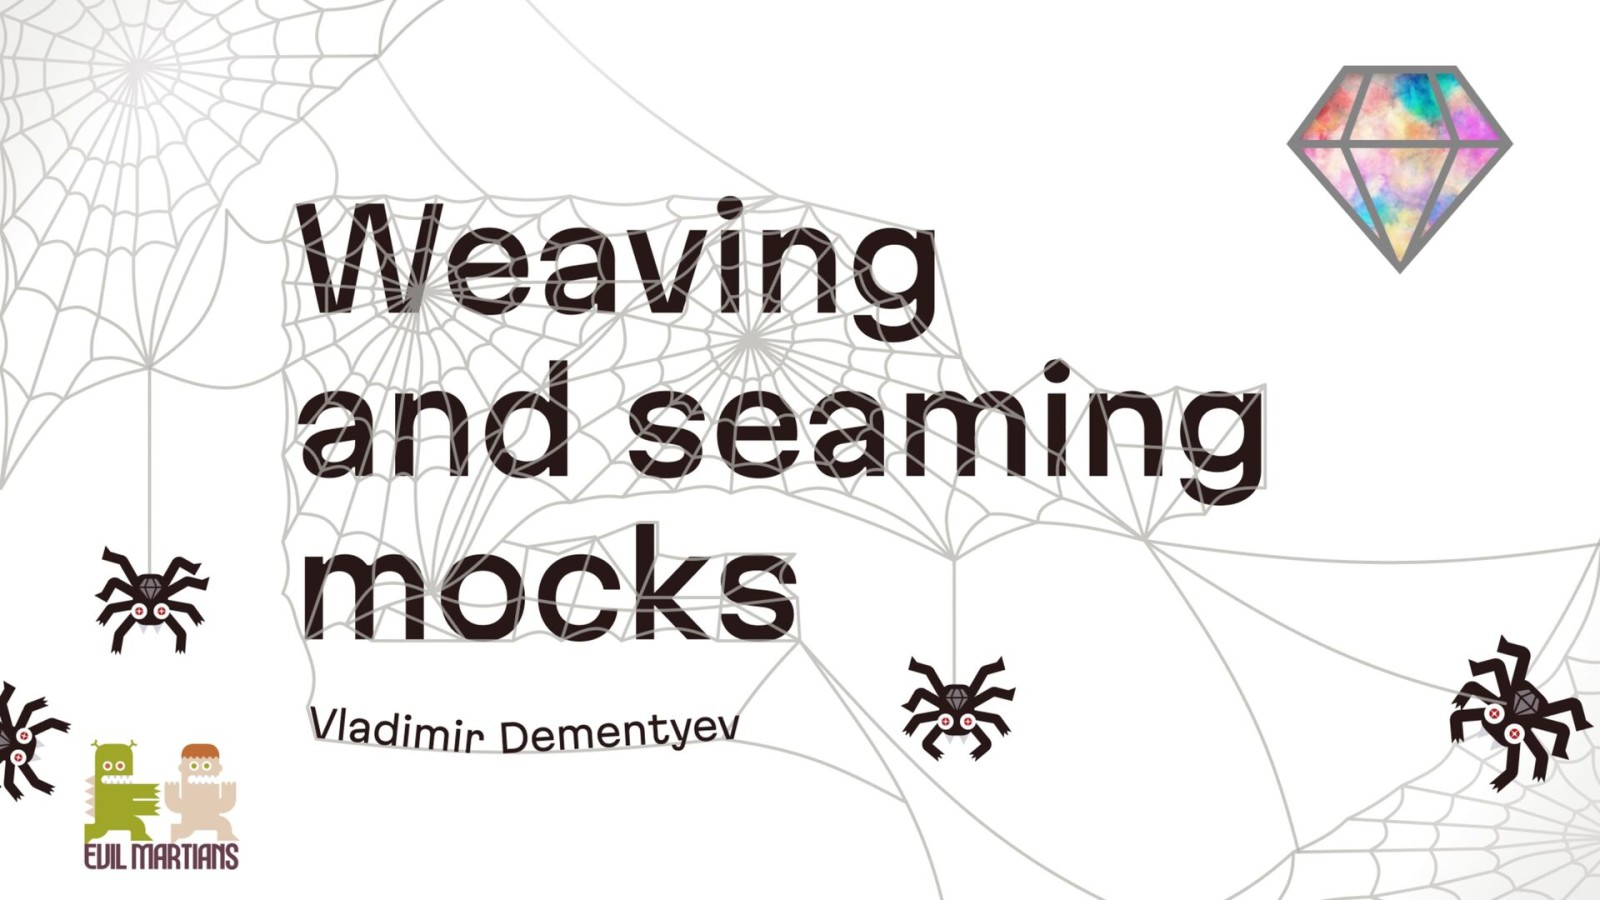 Weaving & seaming mocks